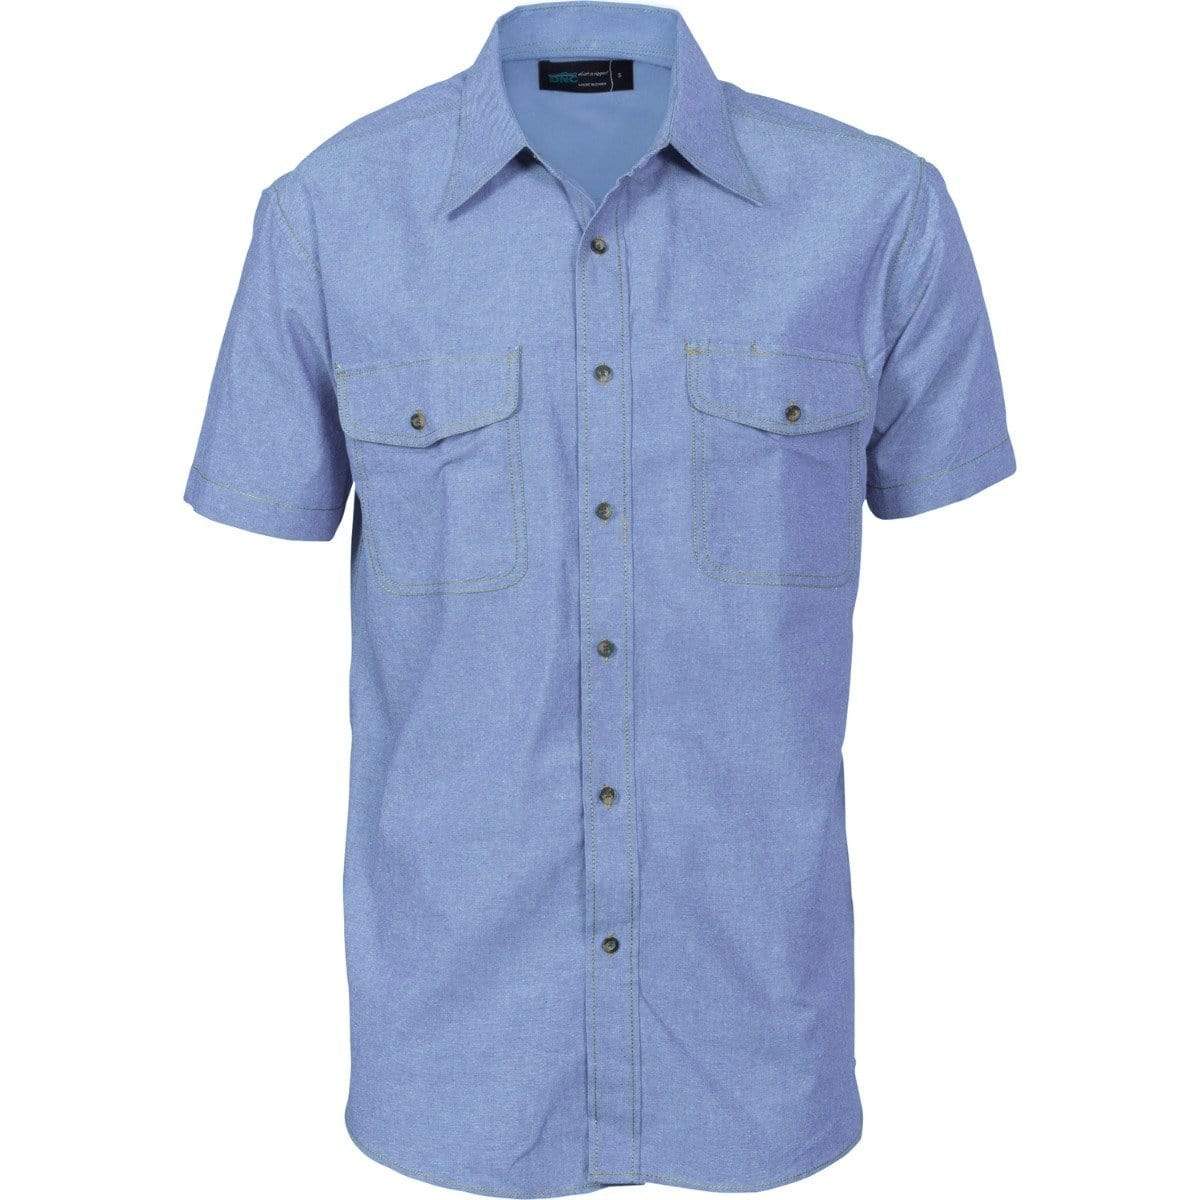 Dnc Workwear Men’s Cotton Chambray Short Sleeve Twin Flap Pocket Shirt - 4103 Work Wear DNC Workwear Chambray S 